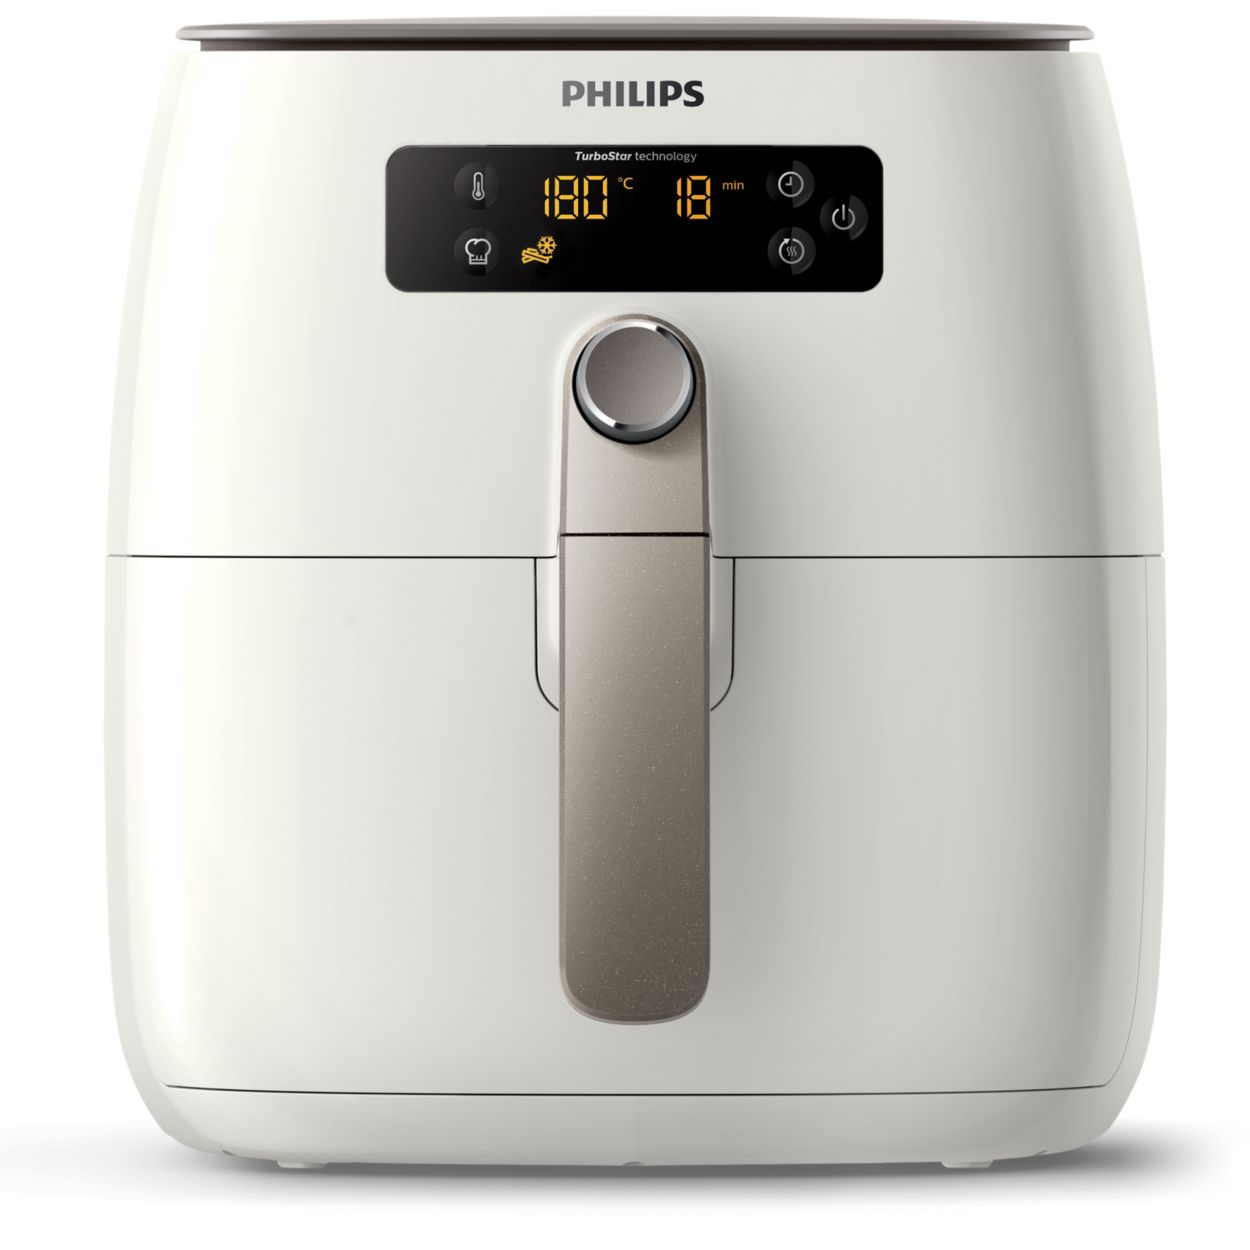  Philips Kitchen Appliances Philips TurboStar Technology Airfryer,  Analog Interface : Home & Kitchen